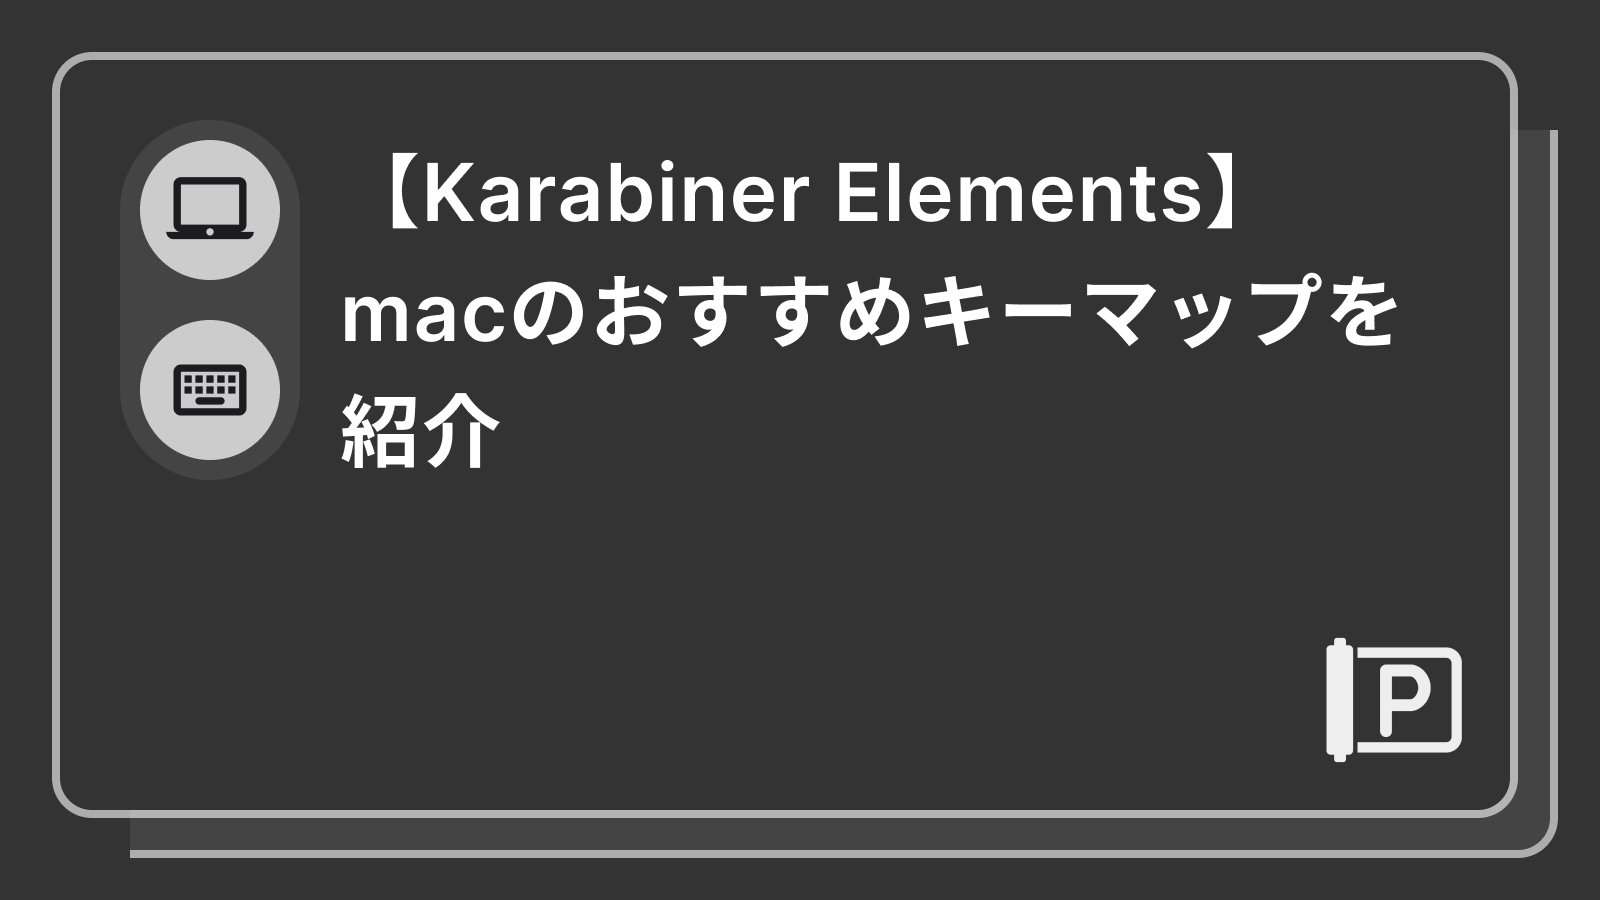 【Karabiner Elements】macのおすすめキーマップを紹介